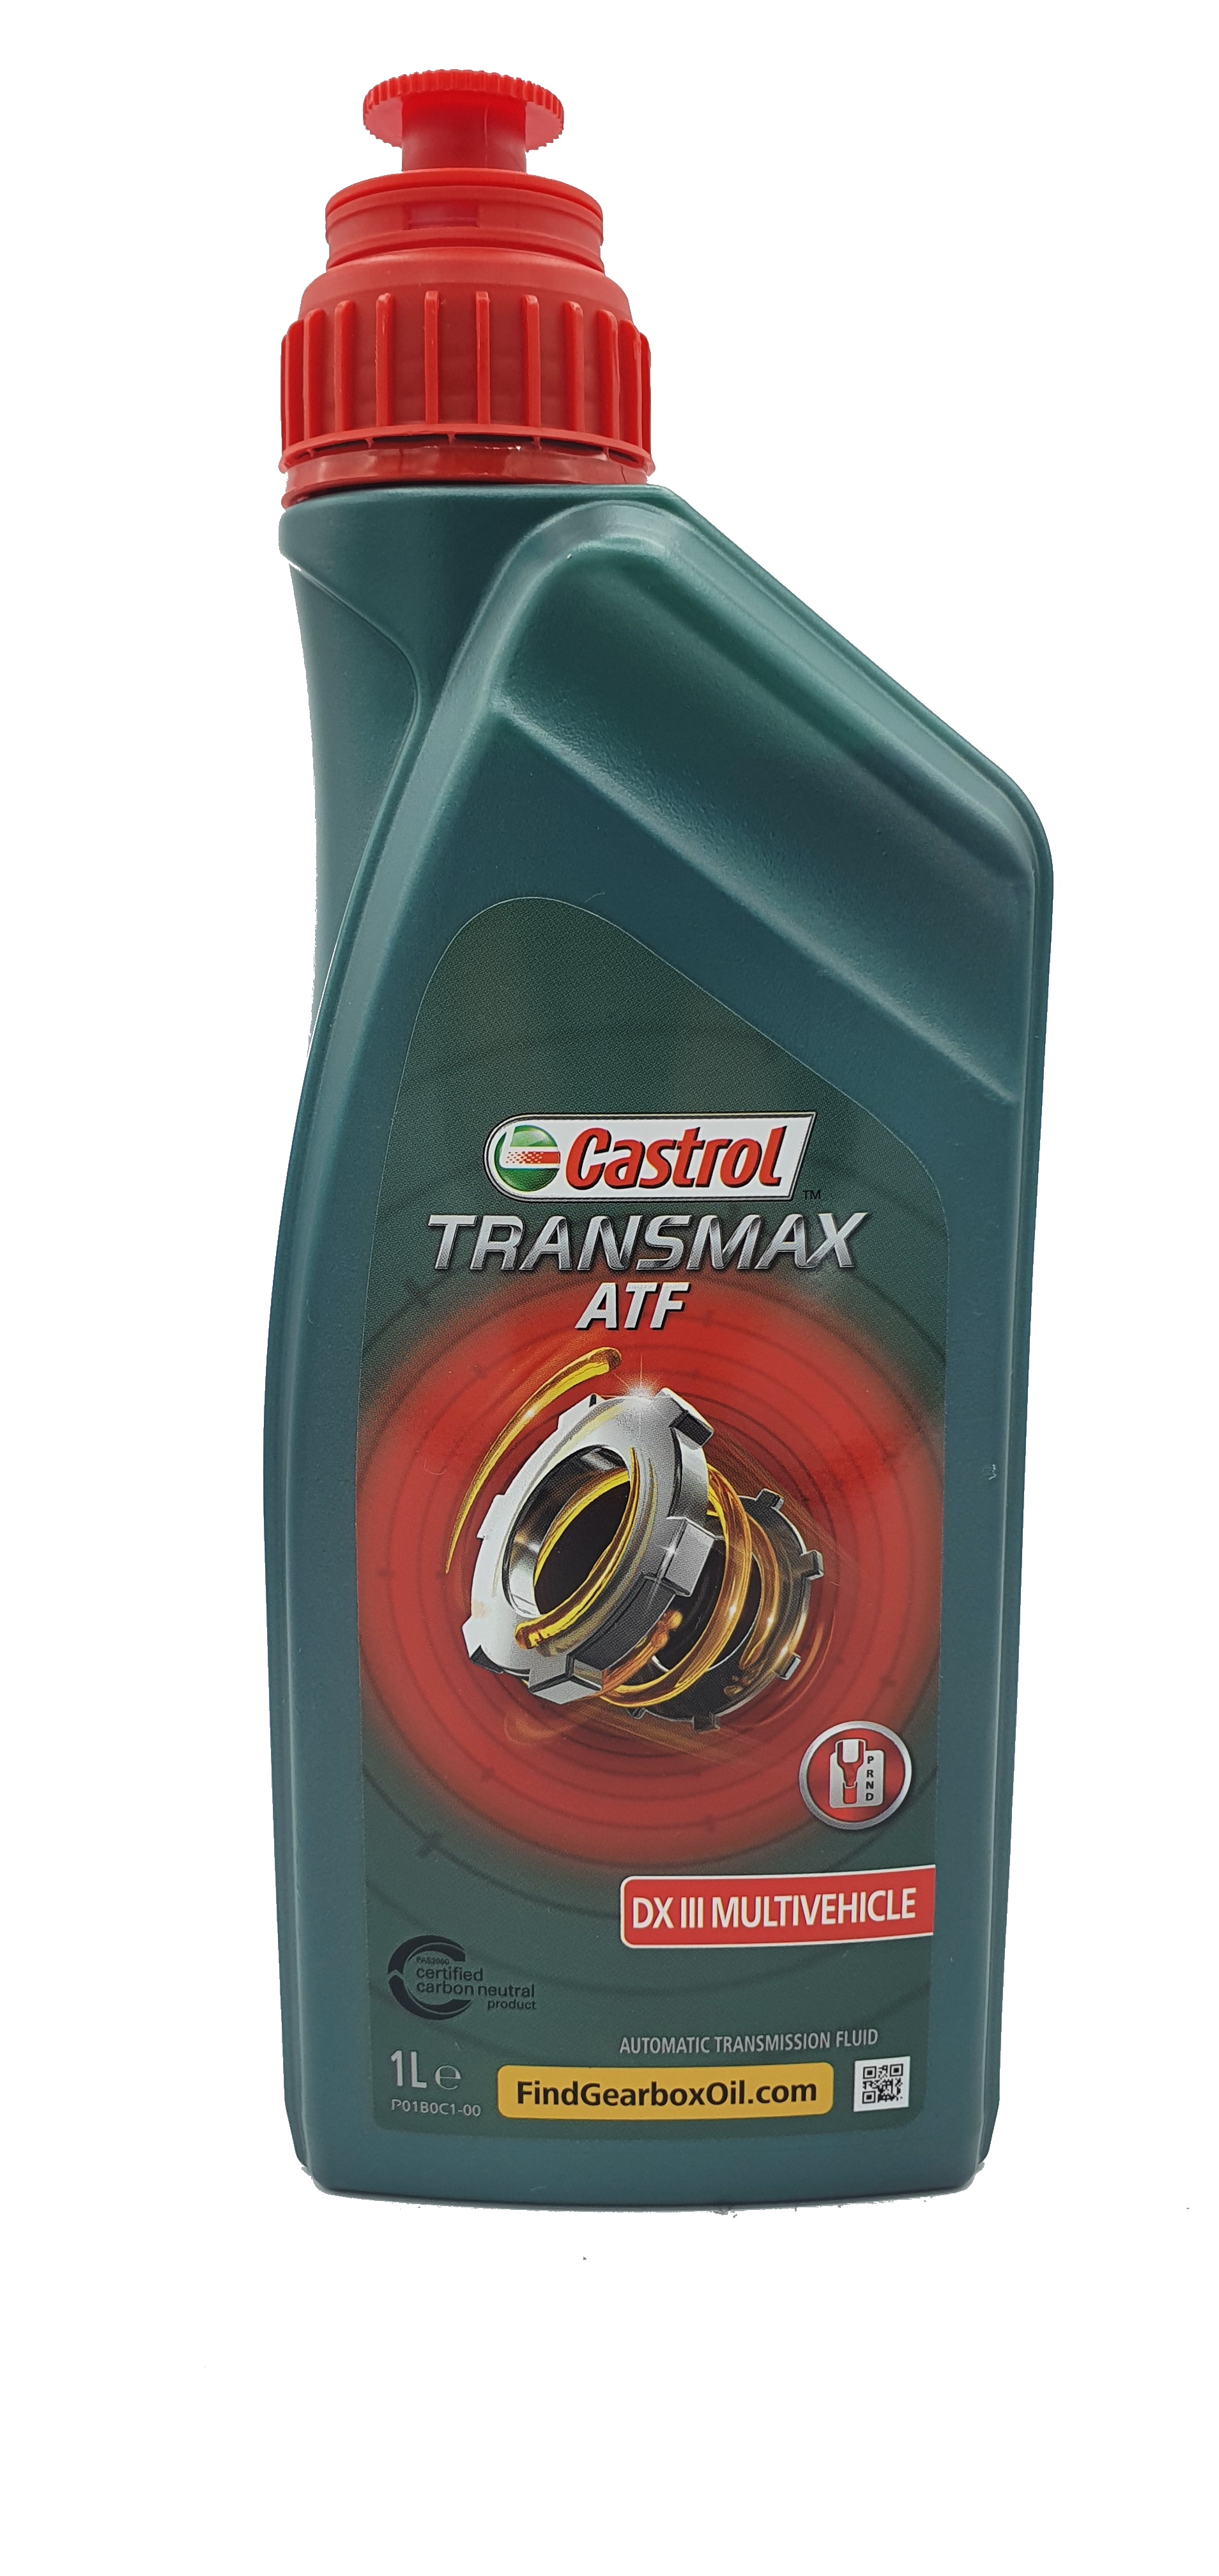 Castrol Transmax ATF DX III Multivehicle 7x1 Liter